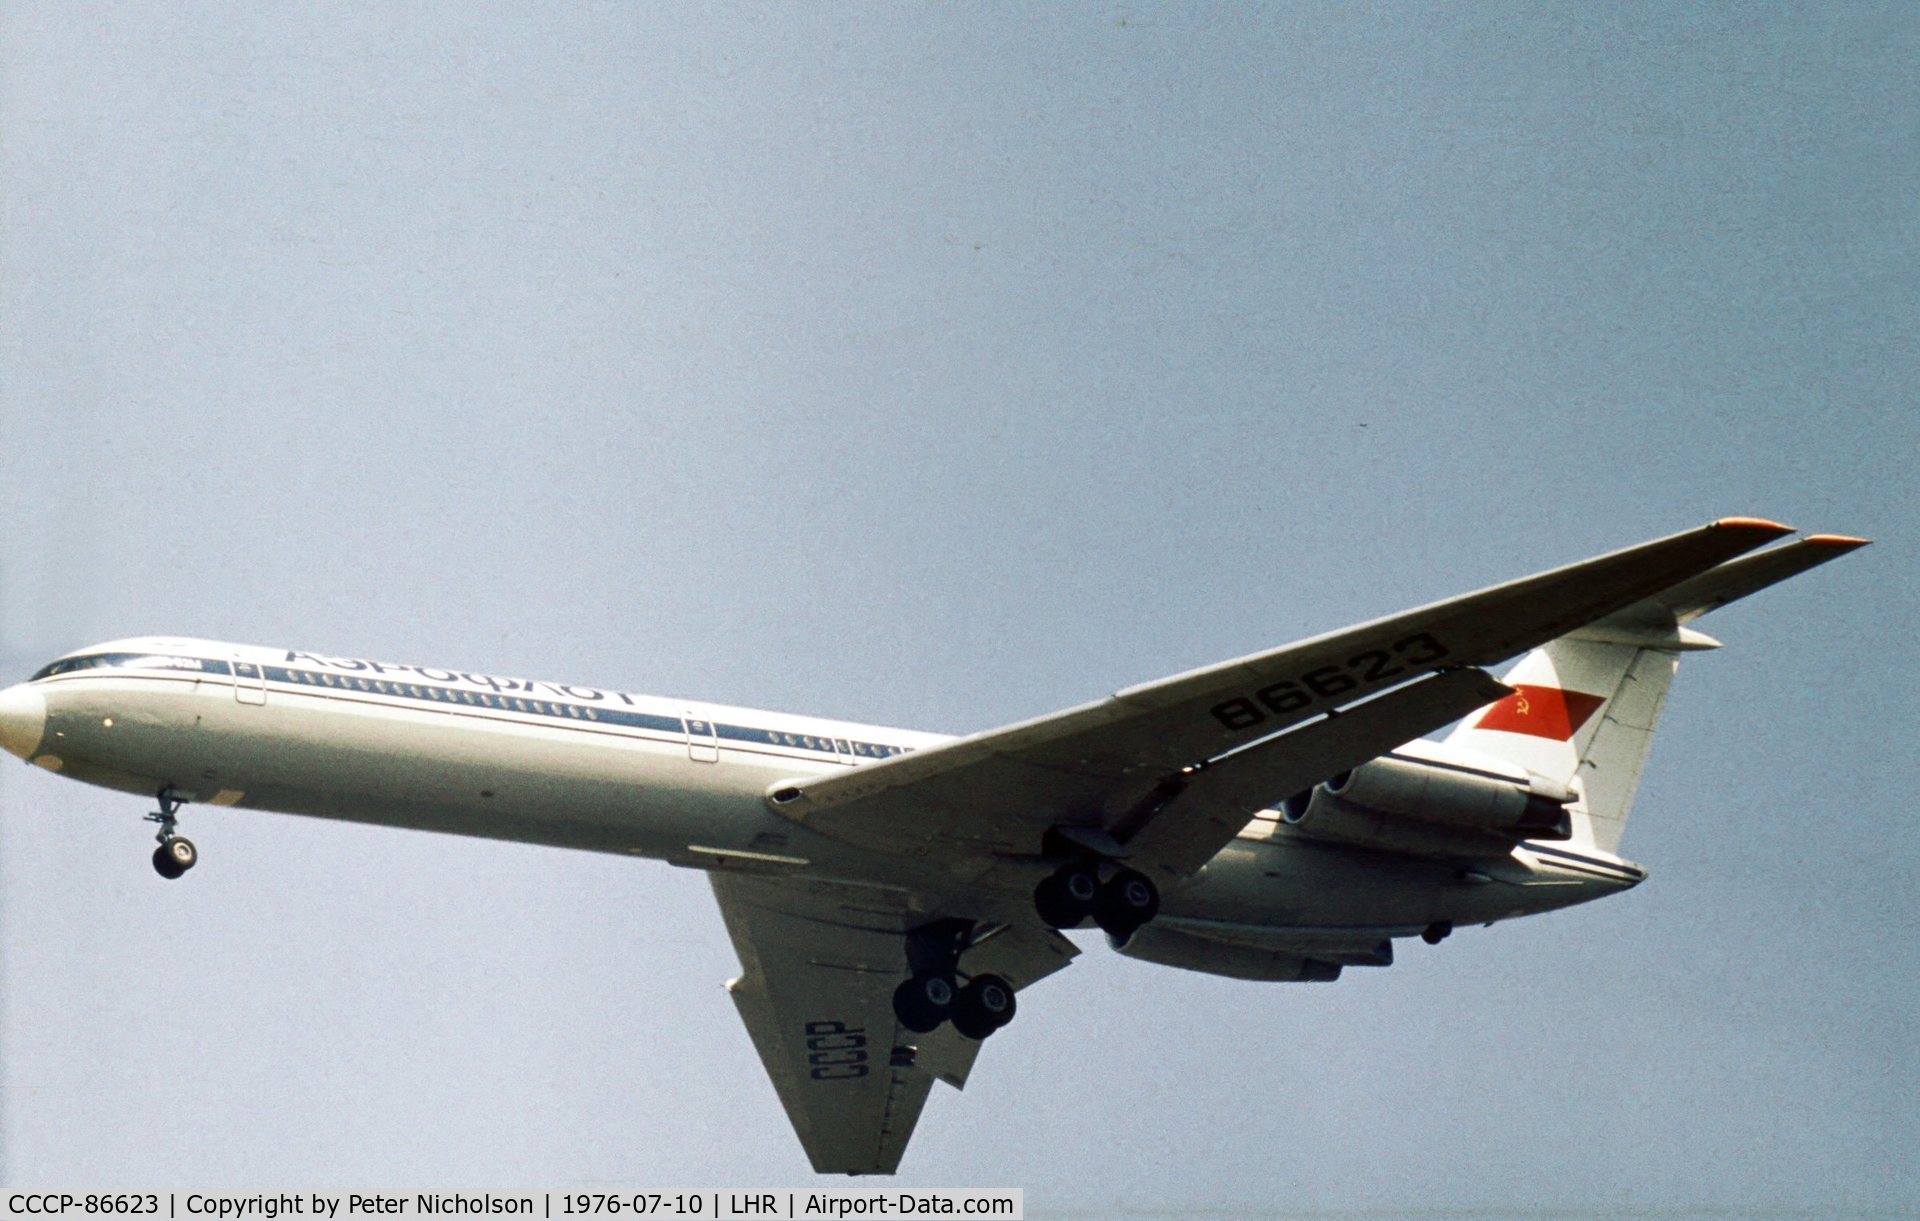 CCCP-86623, 1975 Ilyushin Il-62M C/N 4521728, Aeroflot flew this Classic into London Heathrow in the Summer of 1976.